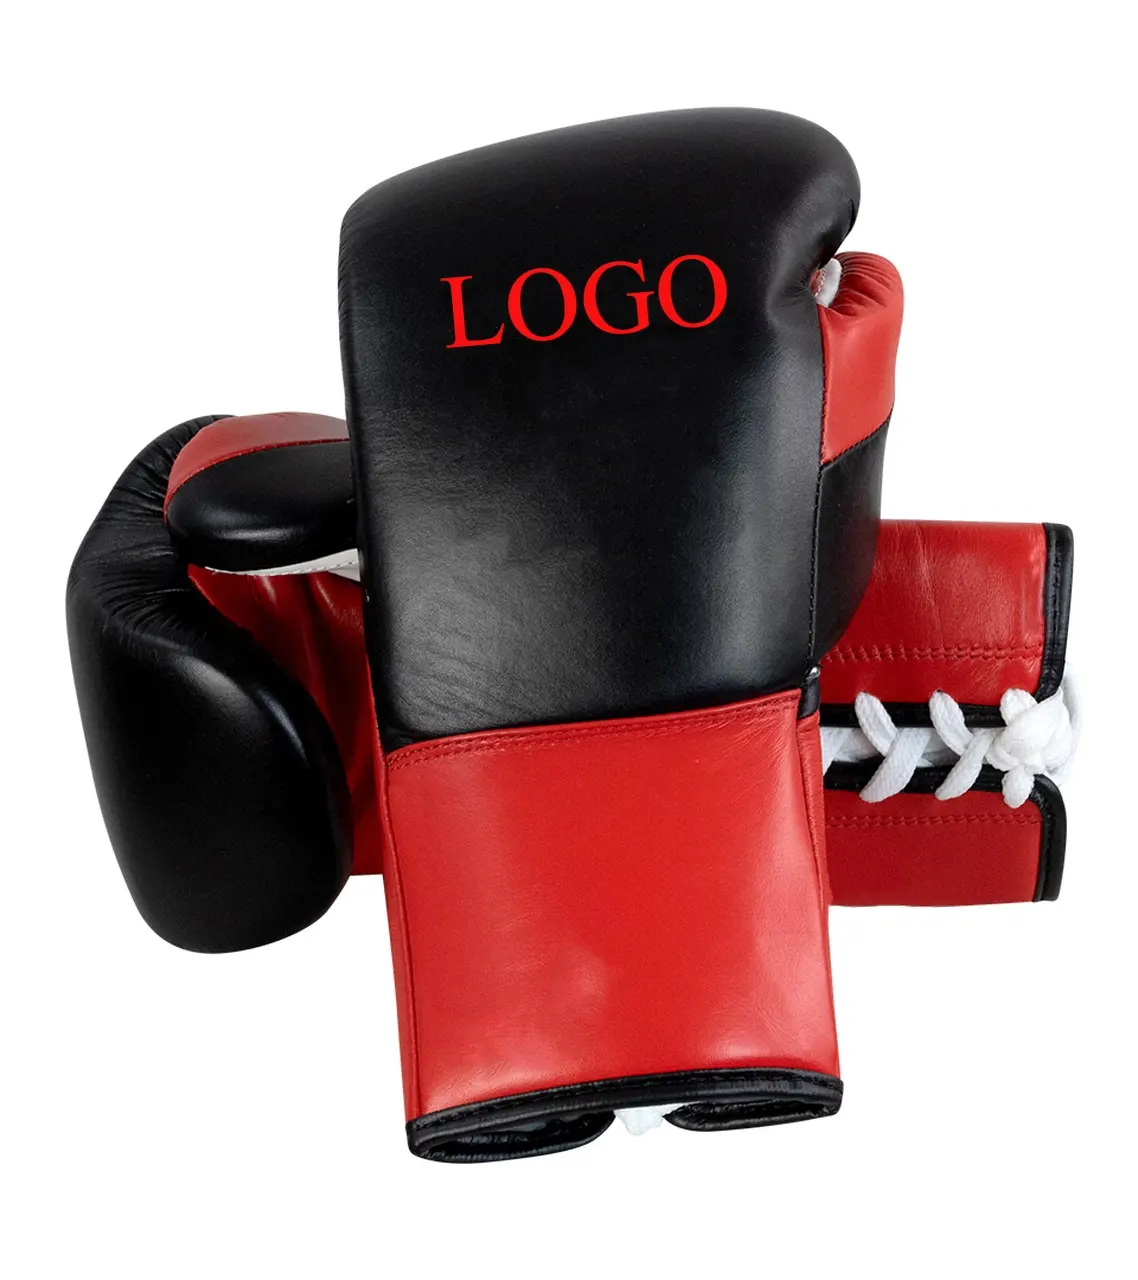 Großhandel Hochwertige Box handschuhe Fitness Boxtraining Power Punch ing Fight Box handschuhe